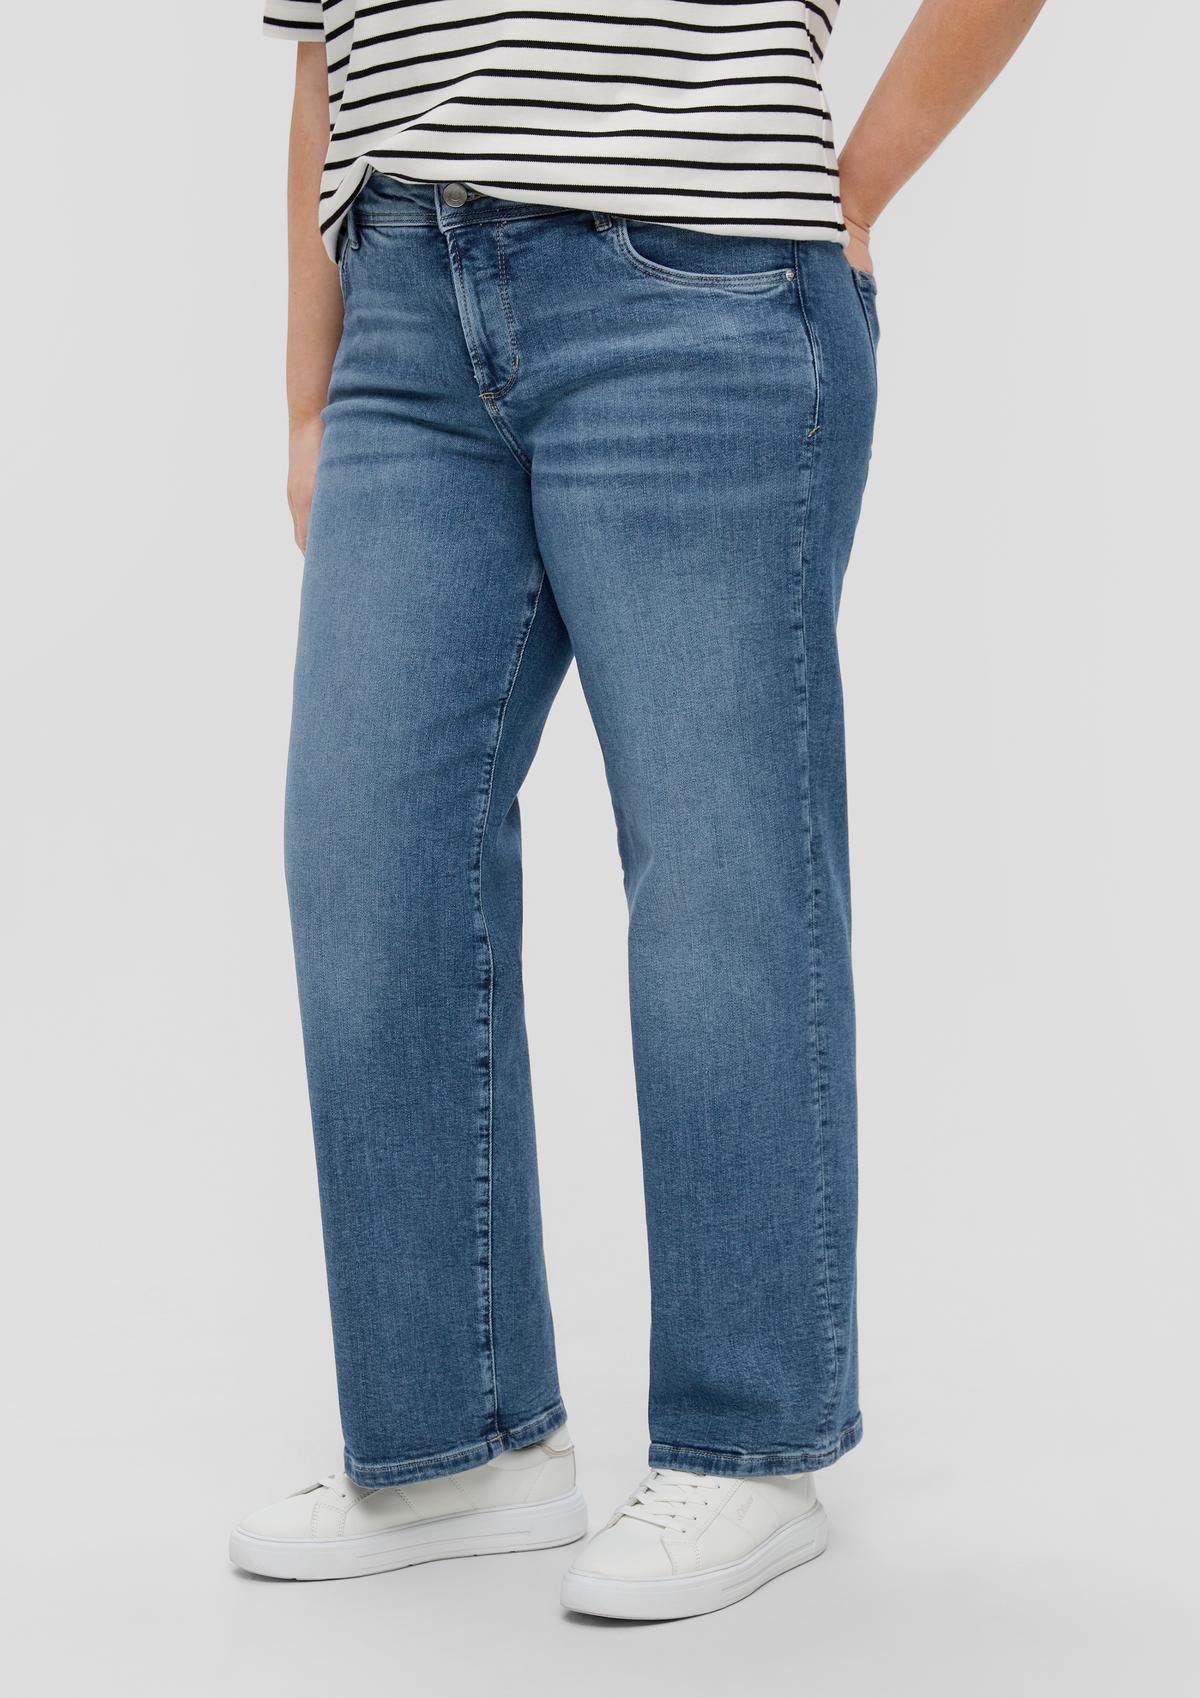 s.Oliver Jeans / regular fit / mid rise / straight leg